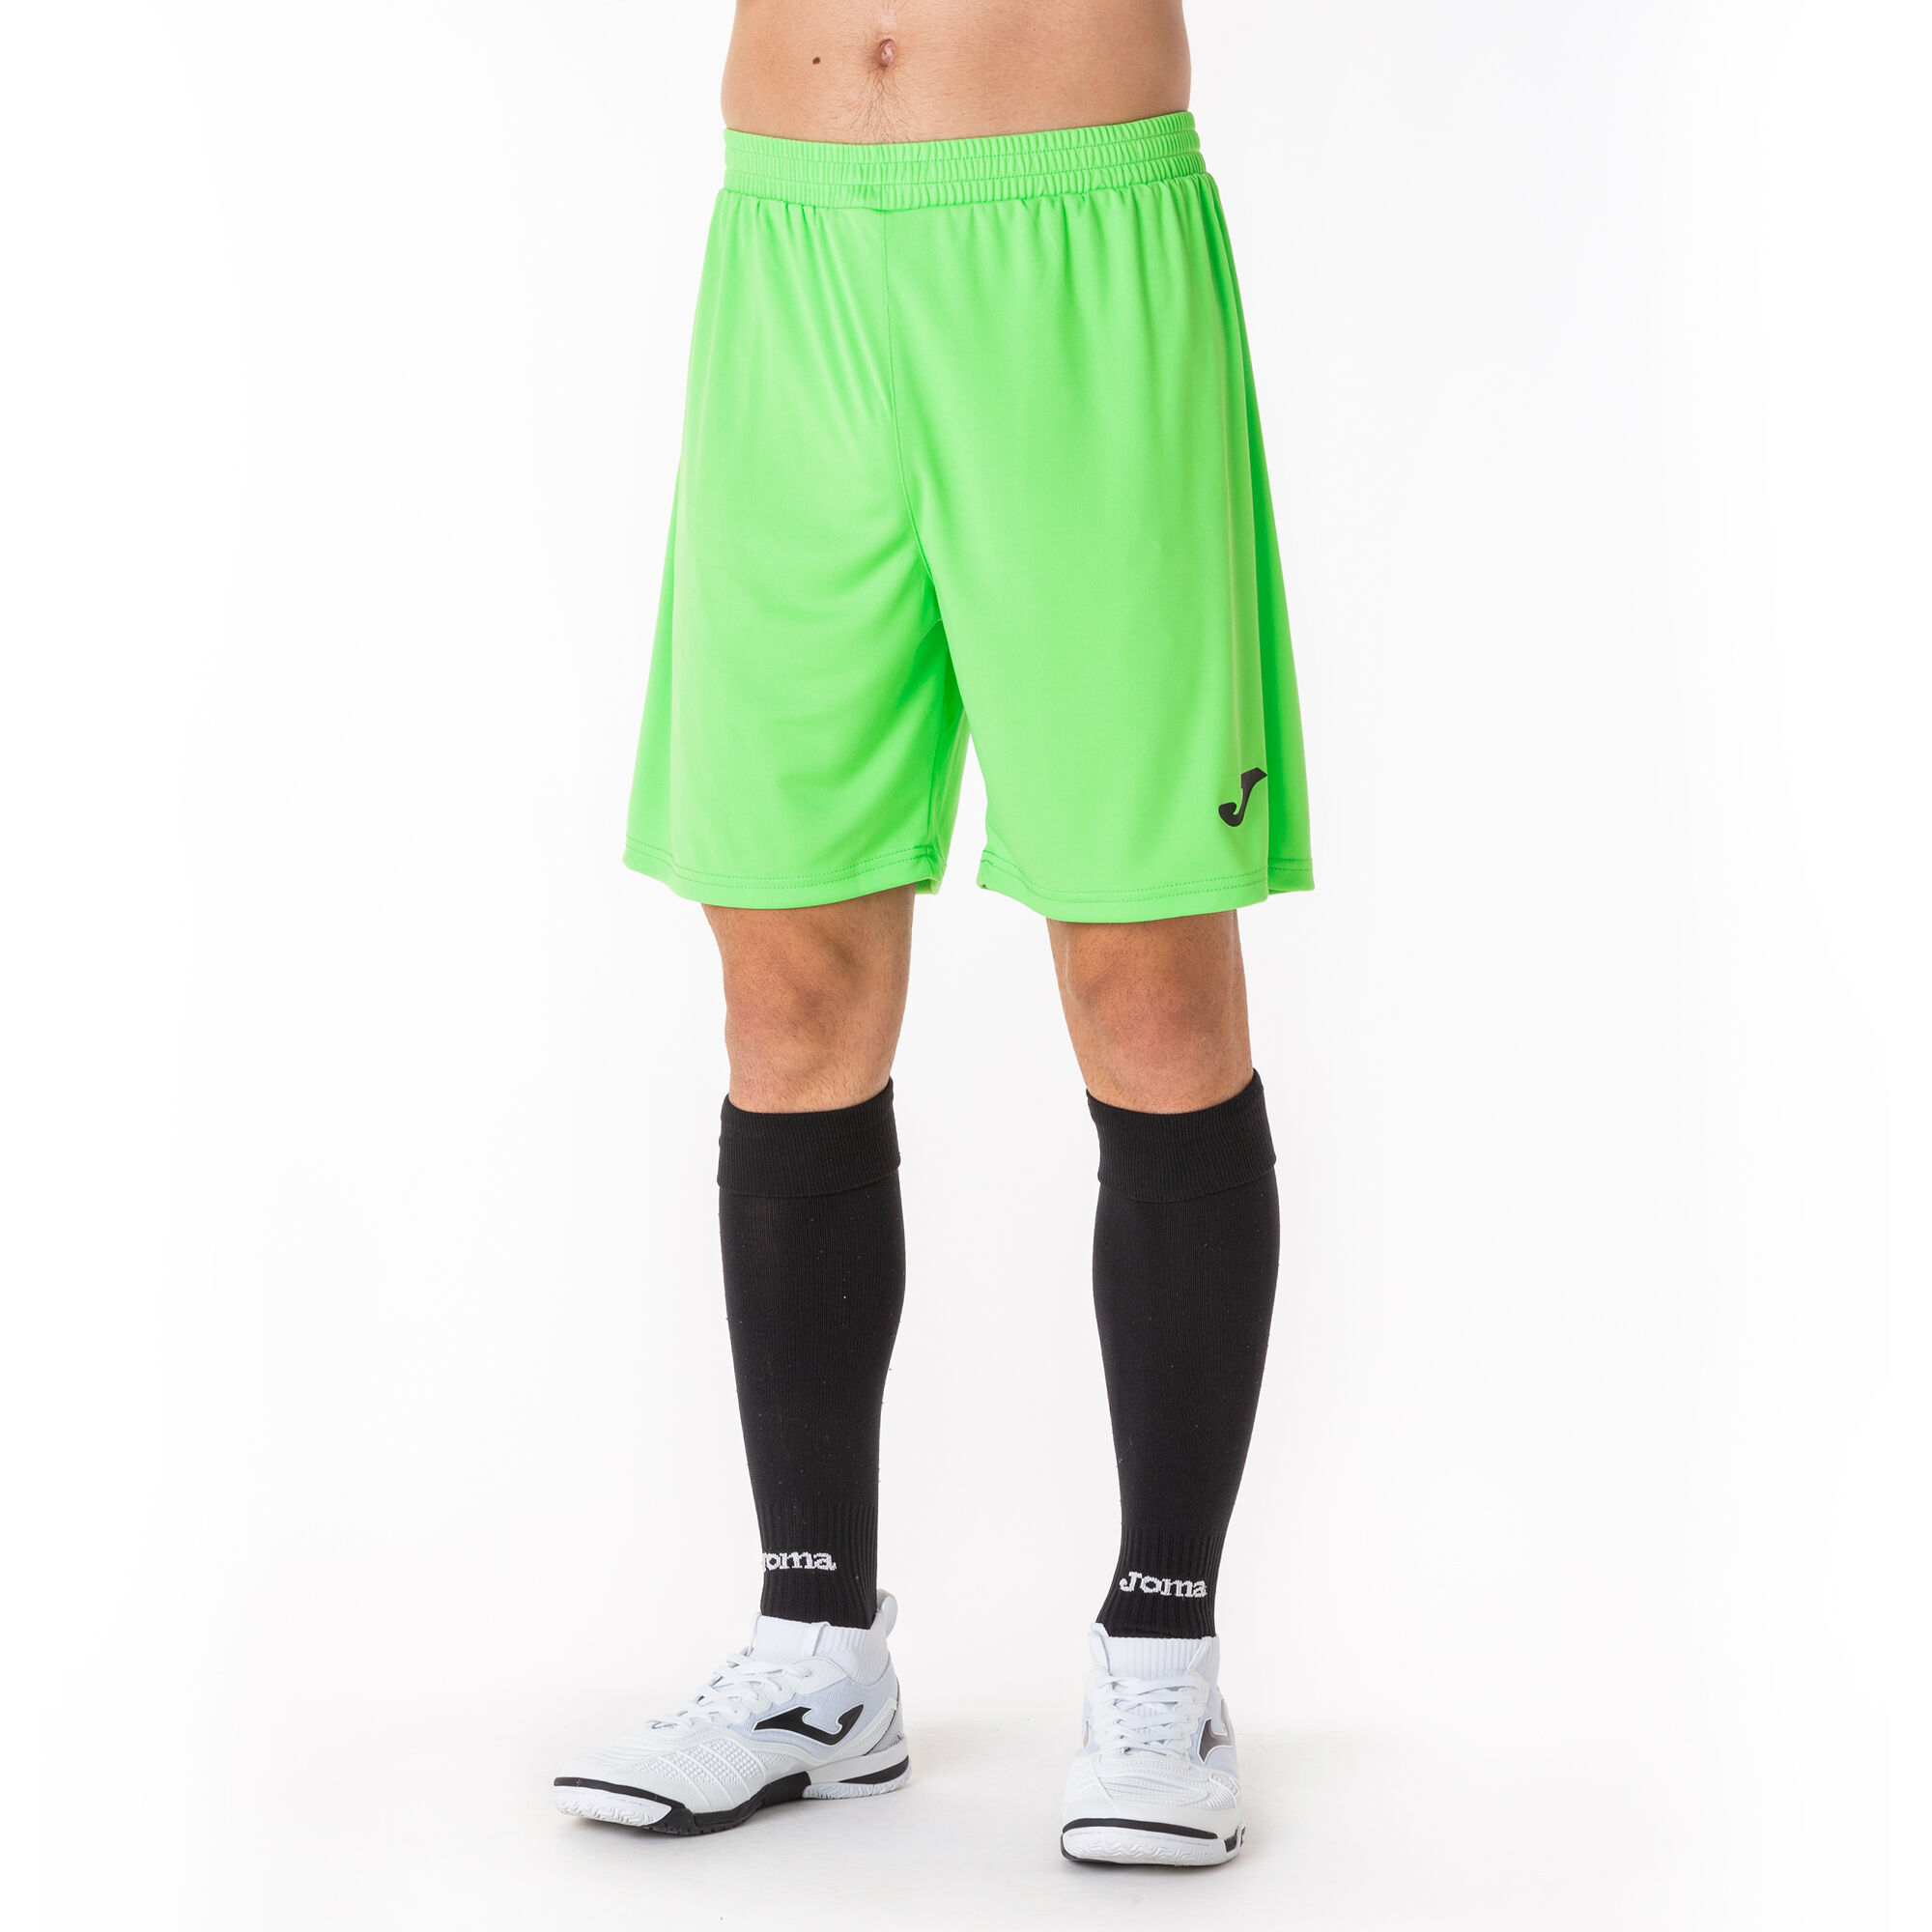 Aanbevolen Bad Uitscheiden Shorts man Nobel fluorescent green | JOMA®